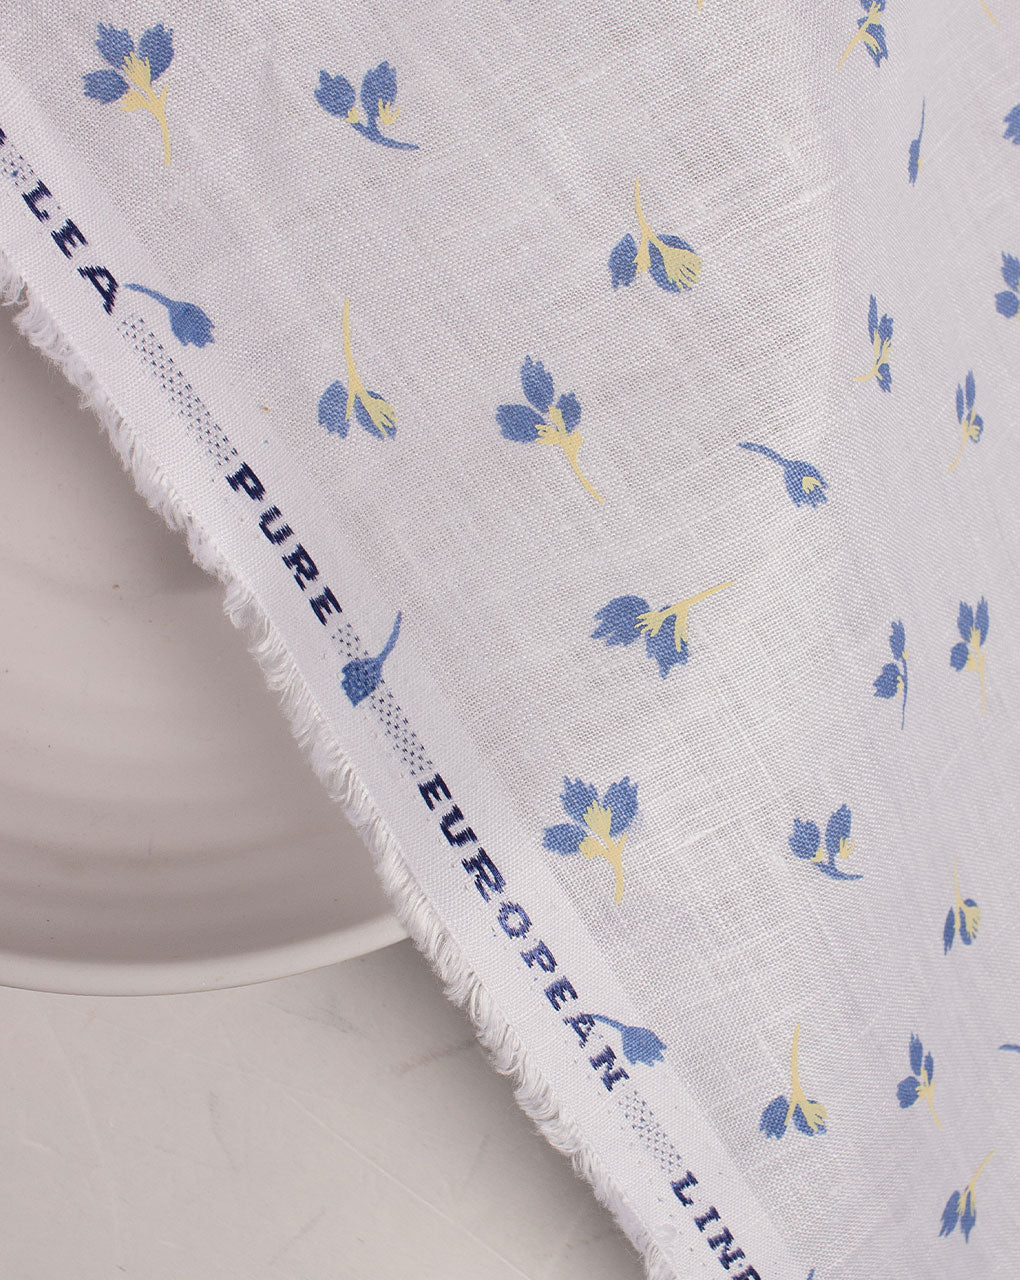 Printed Linen European Flax Certified Fabric